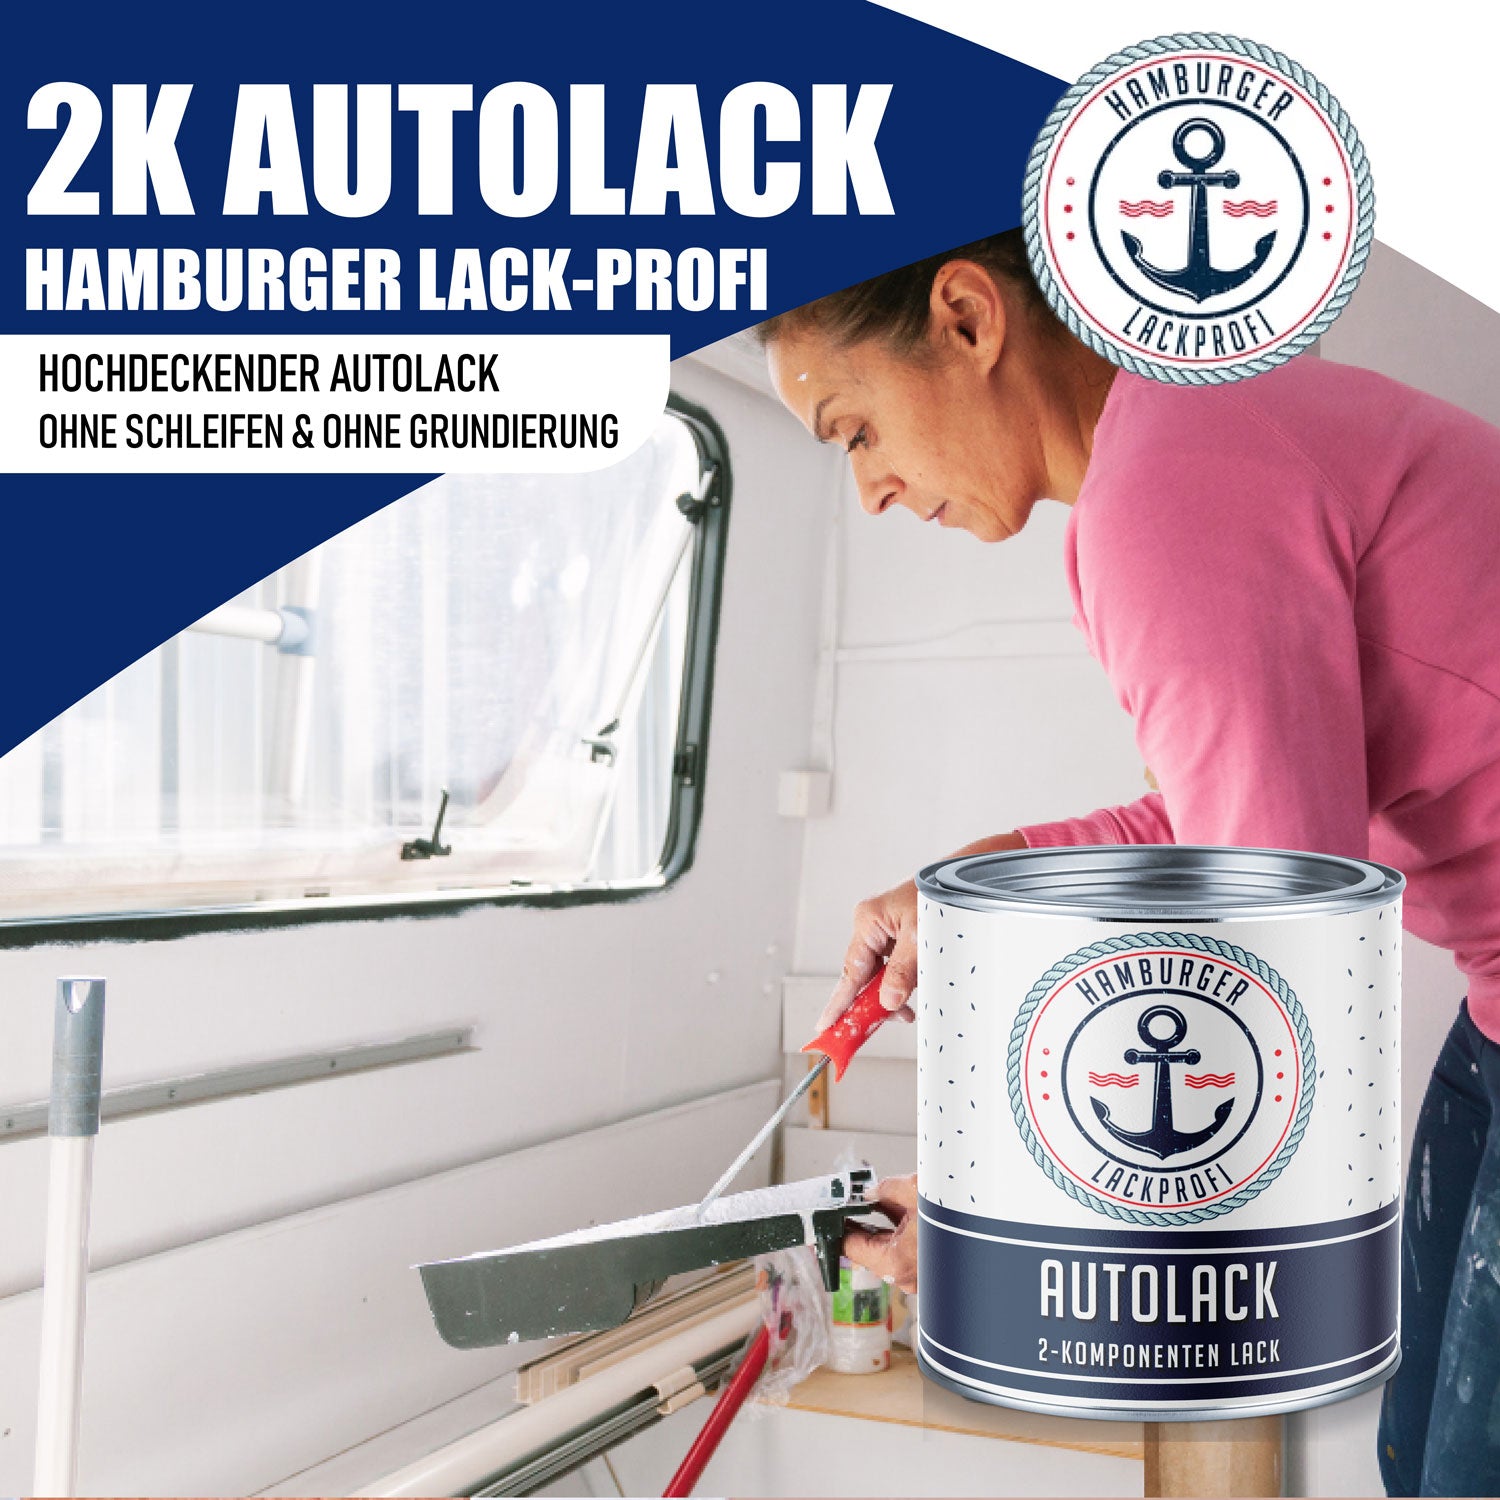 Hamburger Lack-Profi 2K Autolack in Grüngrau RAL 7009 mit Lackierset (X300) & Verdünnung (1 L) - 30% Sparangebot